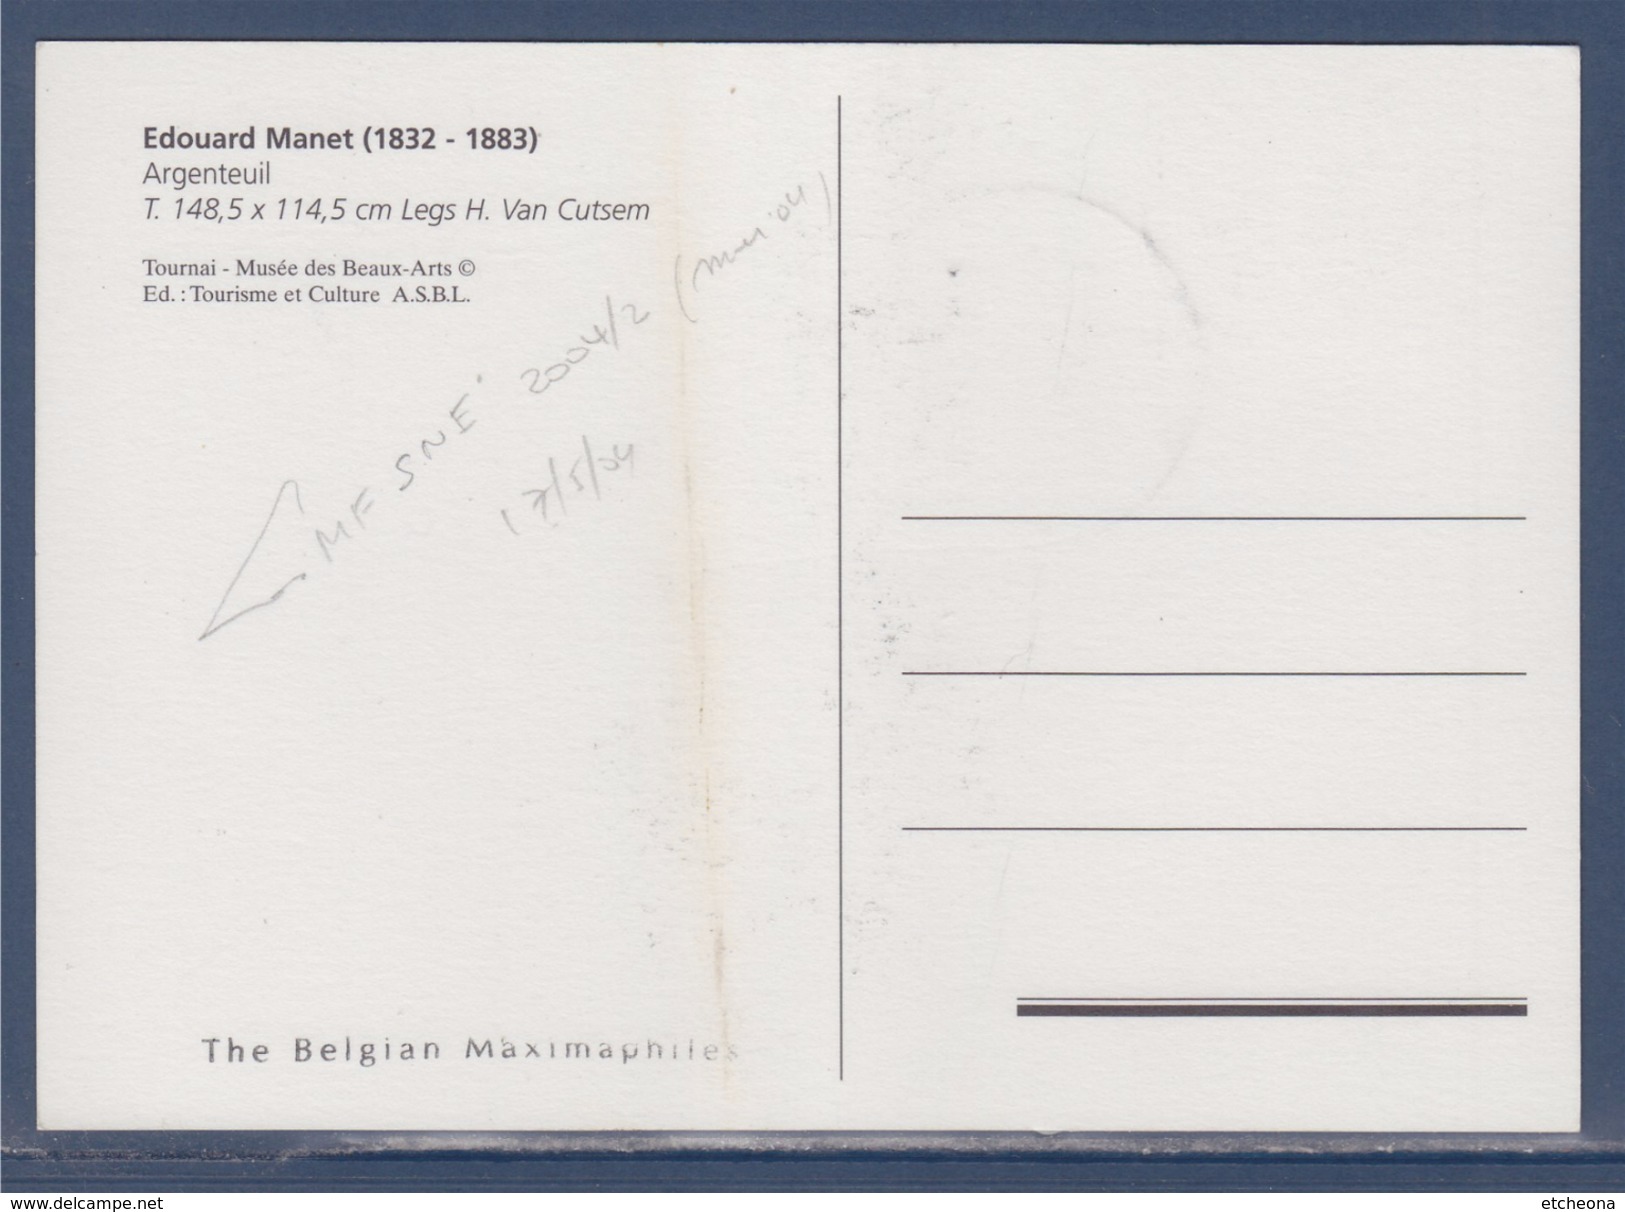 Edouard Manet Argenteuil Carte Postale Tournai 5.11.03 Belgique - 2001-2010